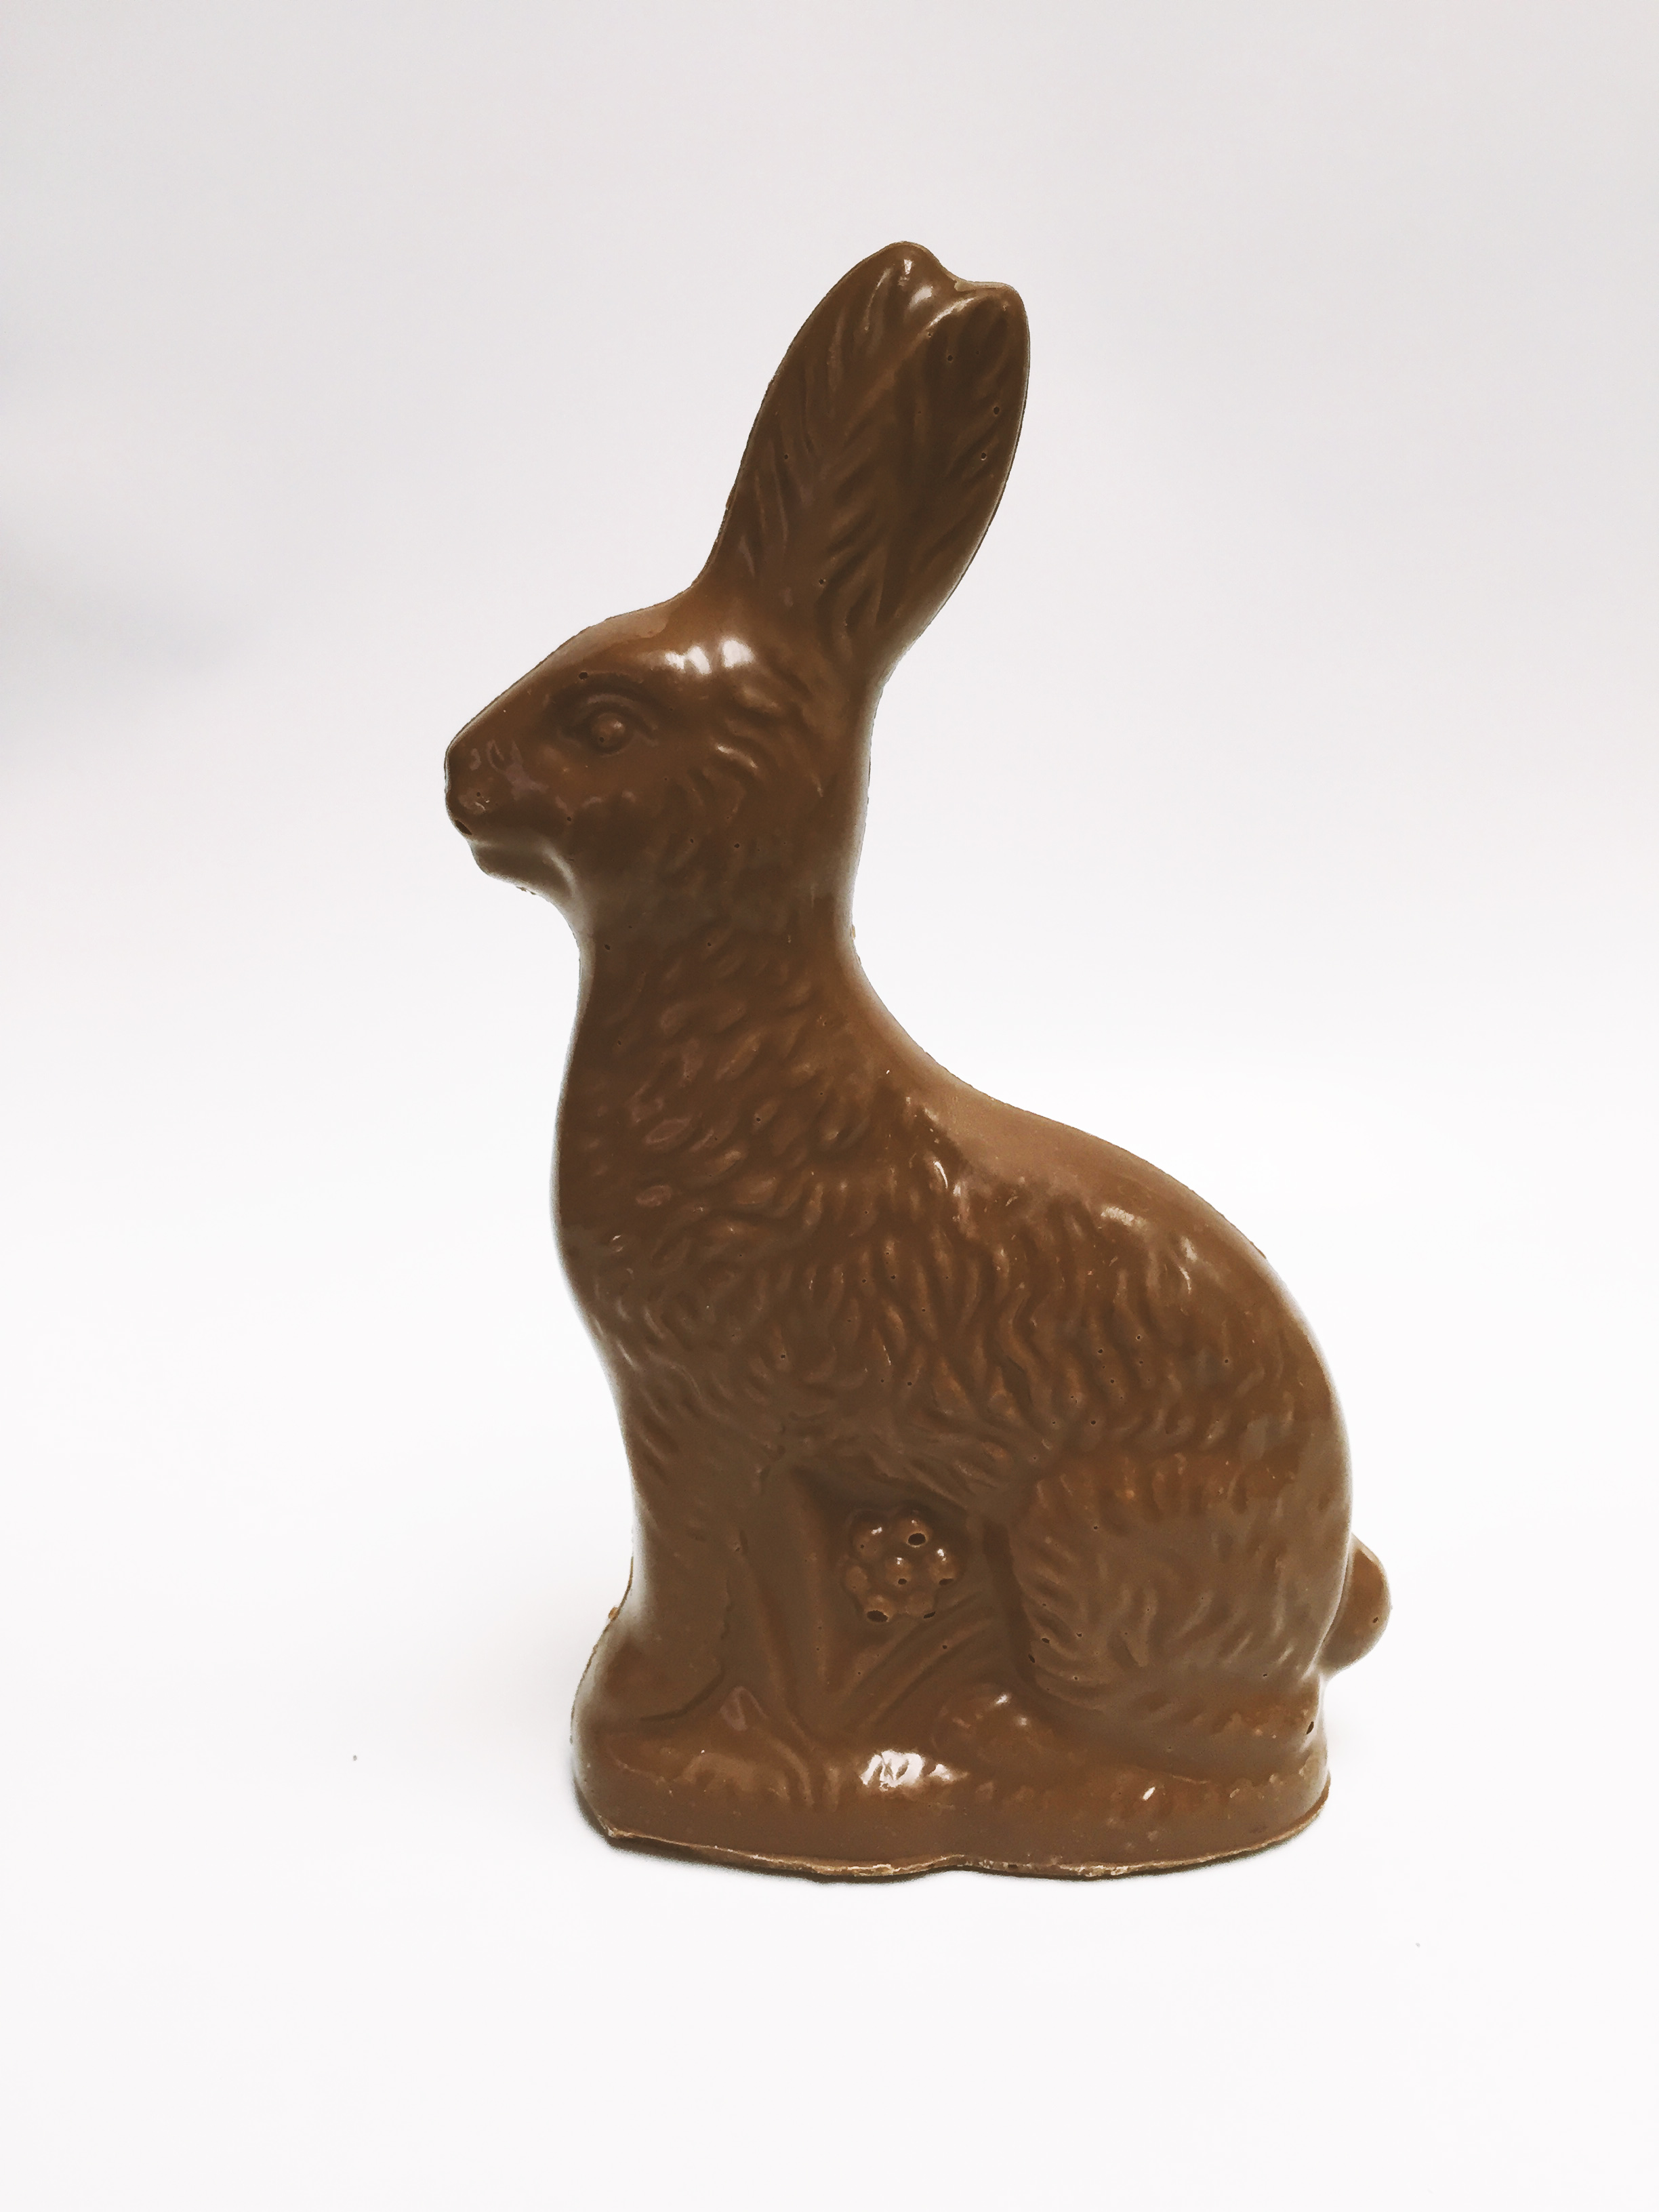 Solid Chocolate Sitting Rabbit Goumas Candyland